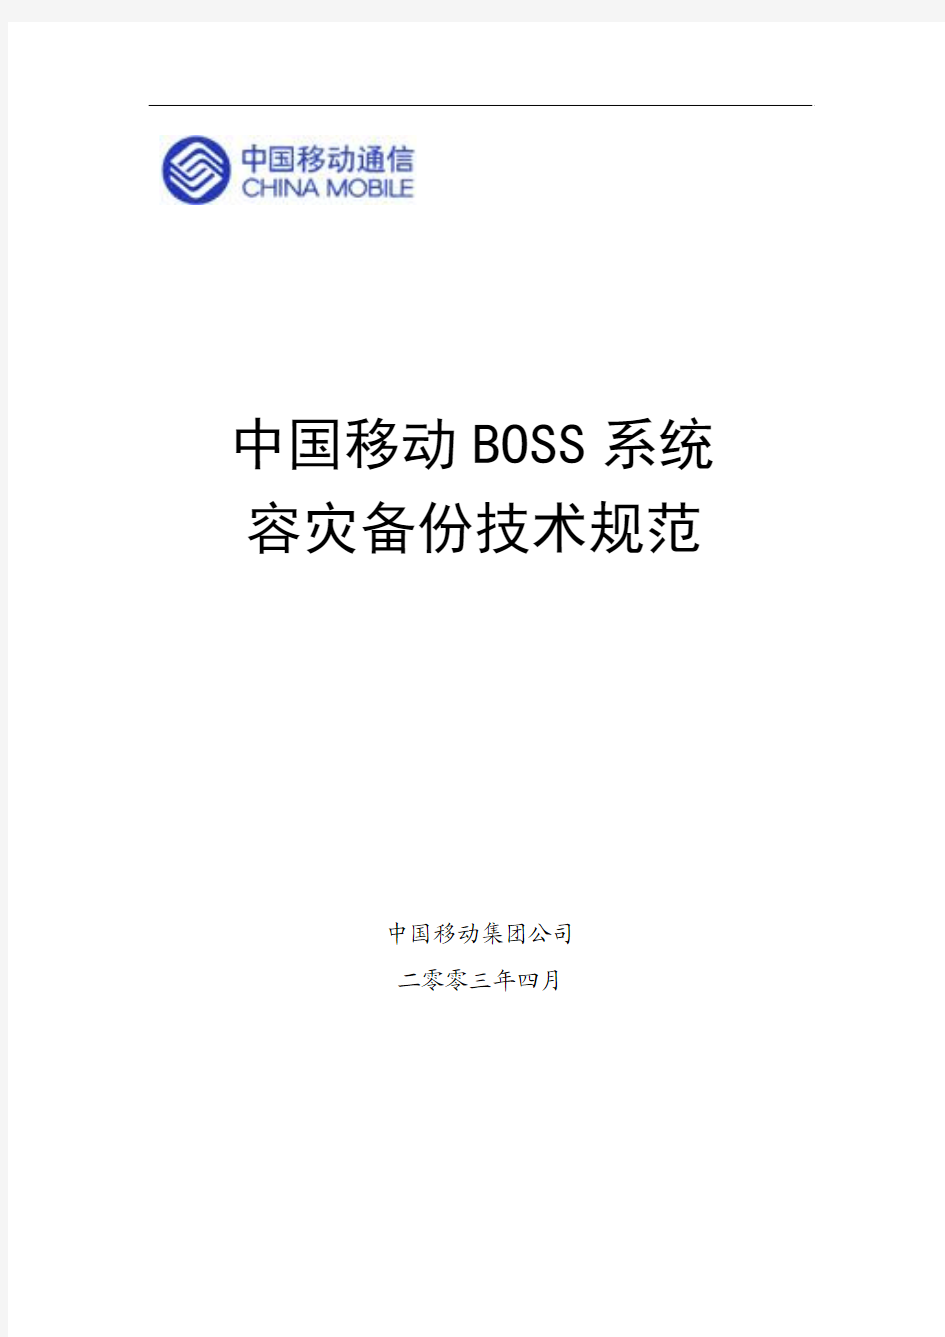 BOSS系统容灾备份技术规范